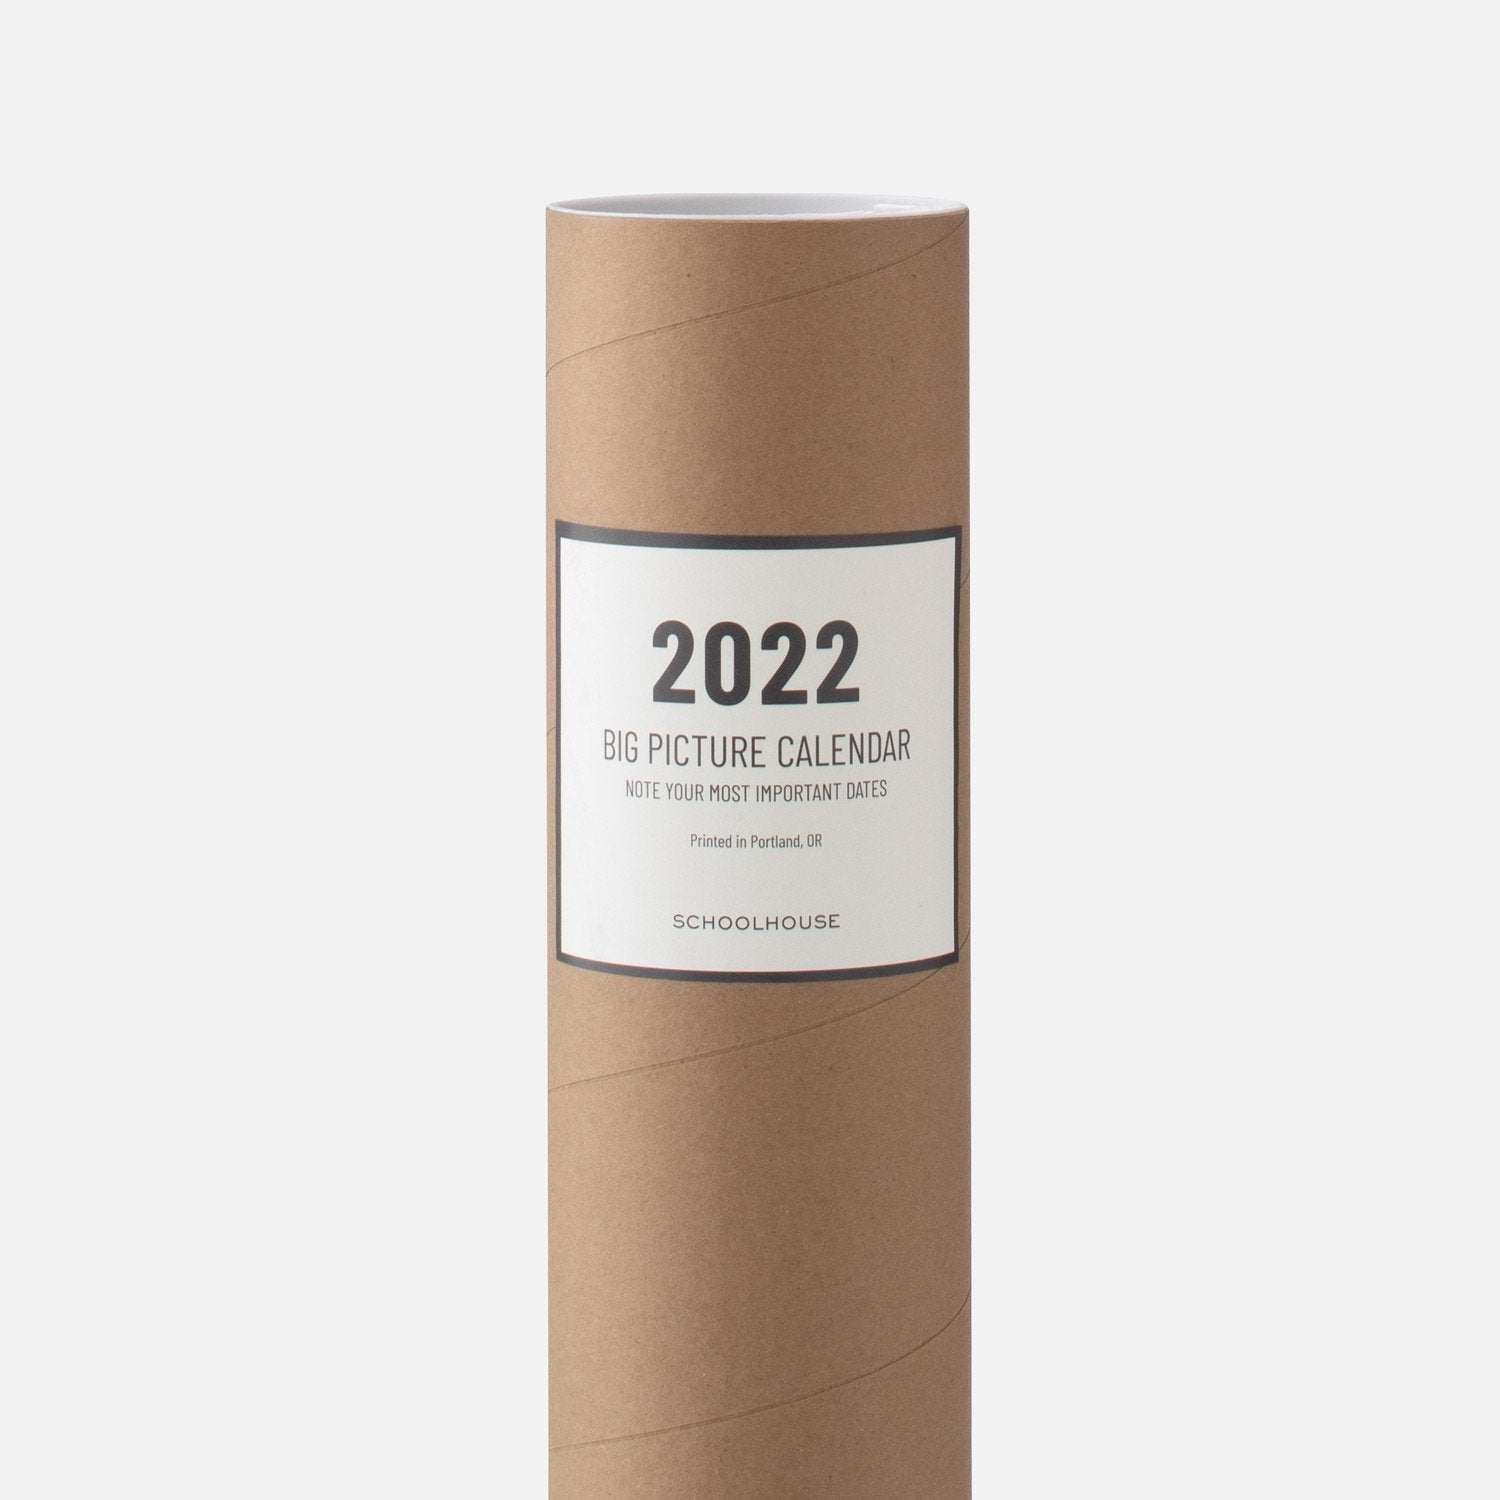 2022 Big Picture Calendar